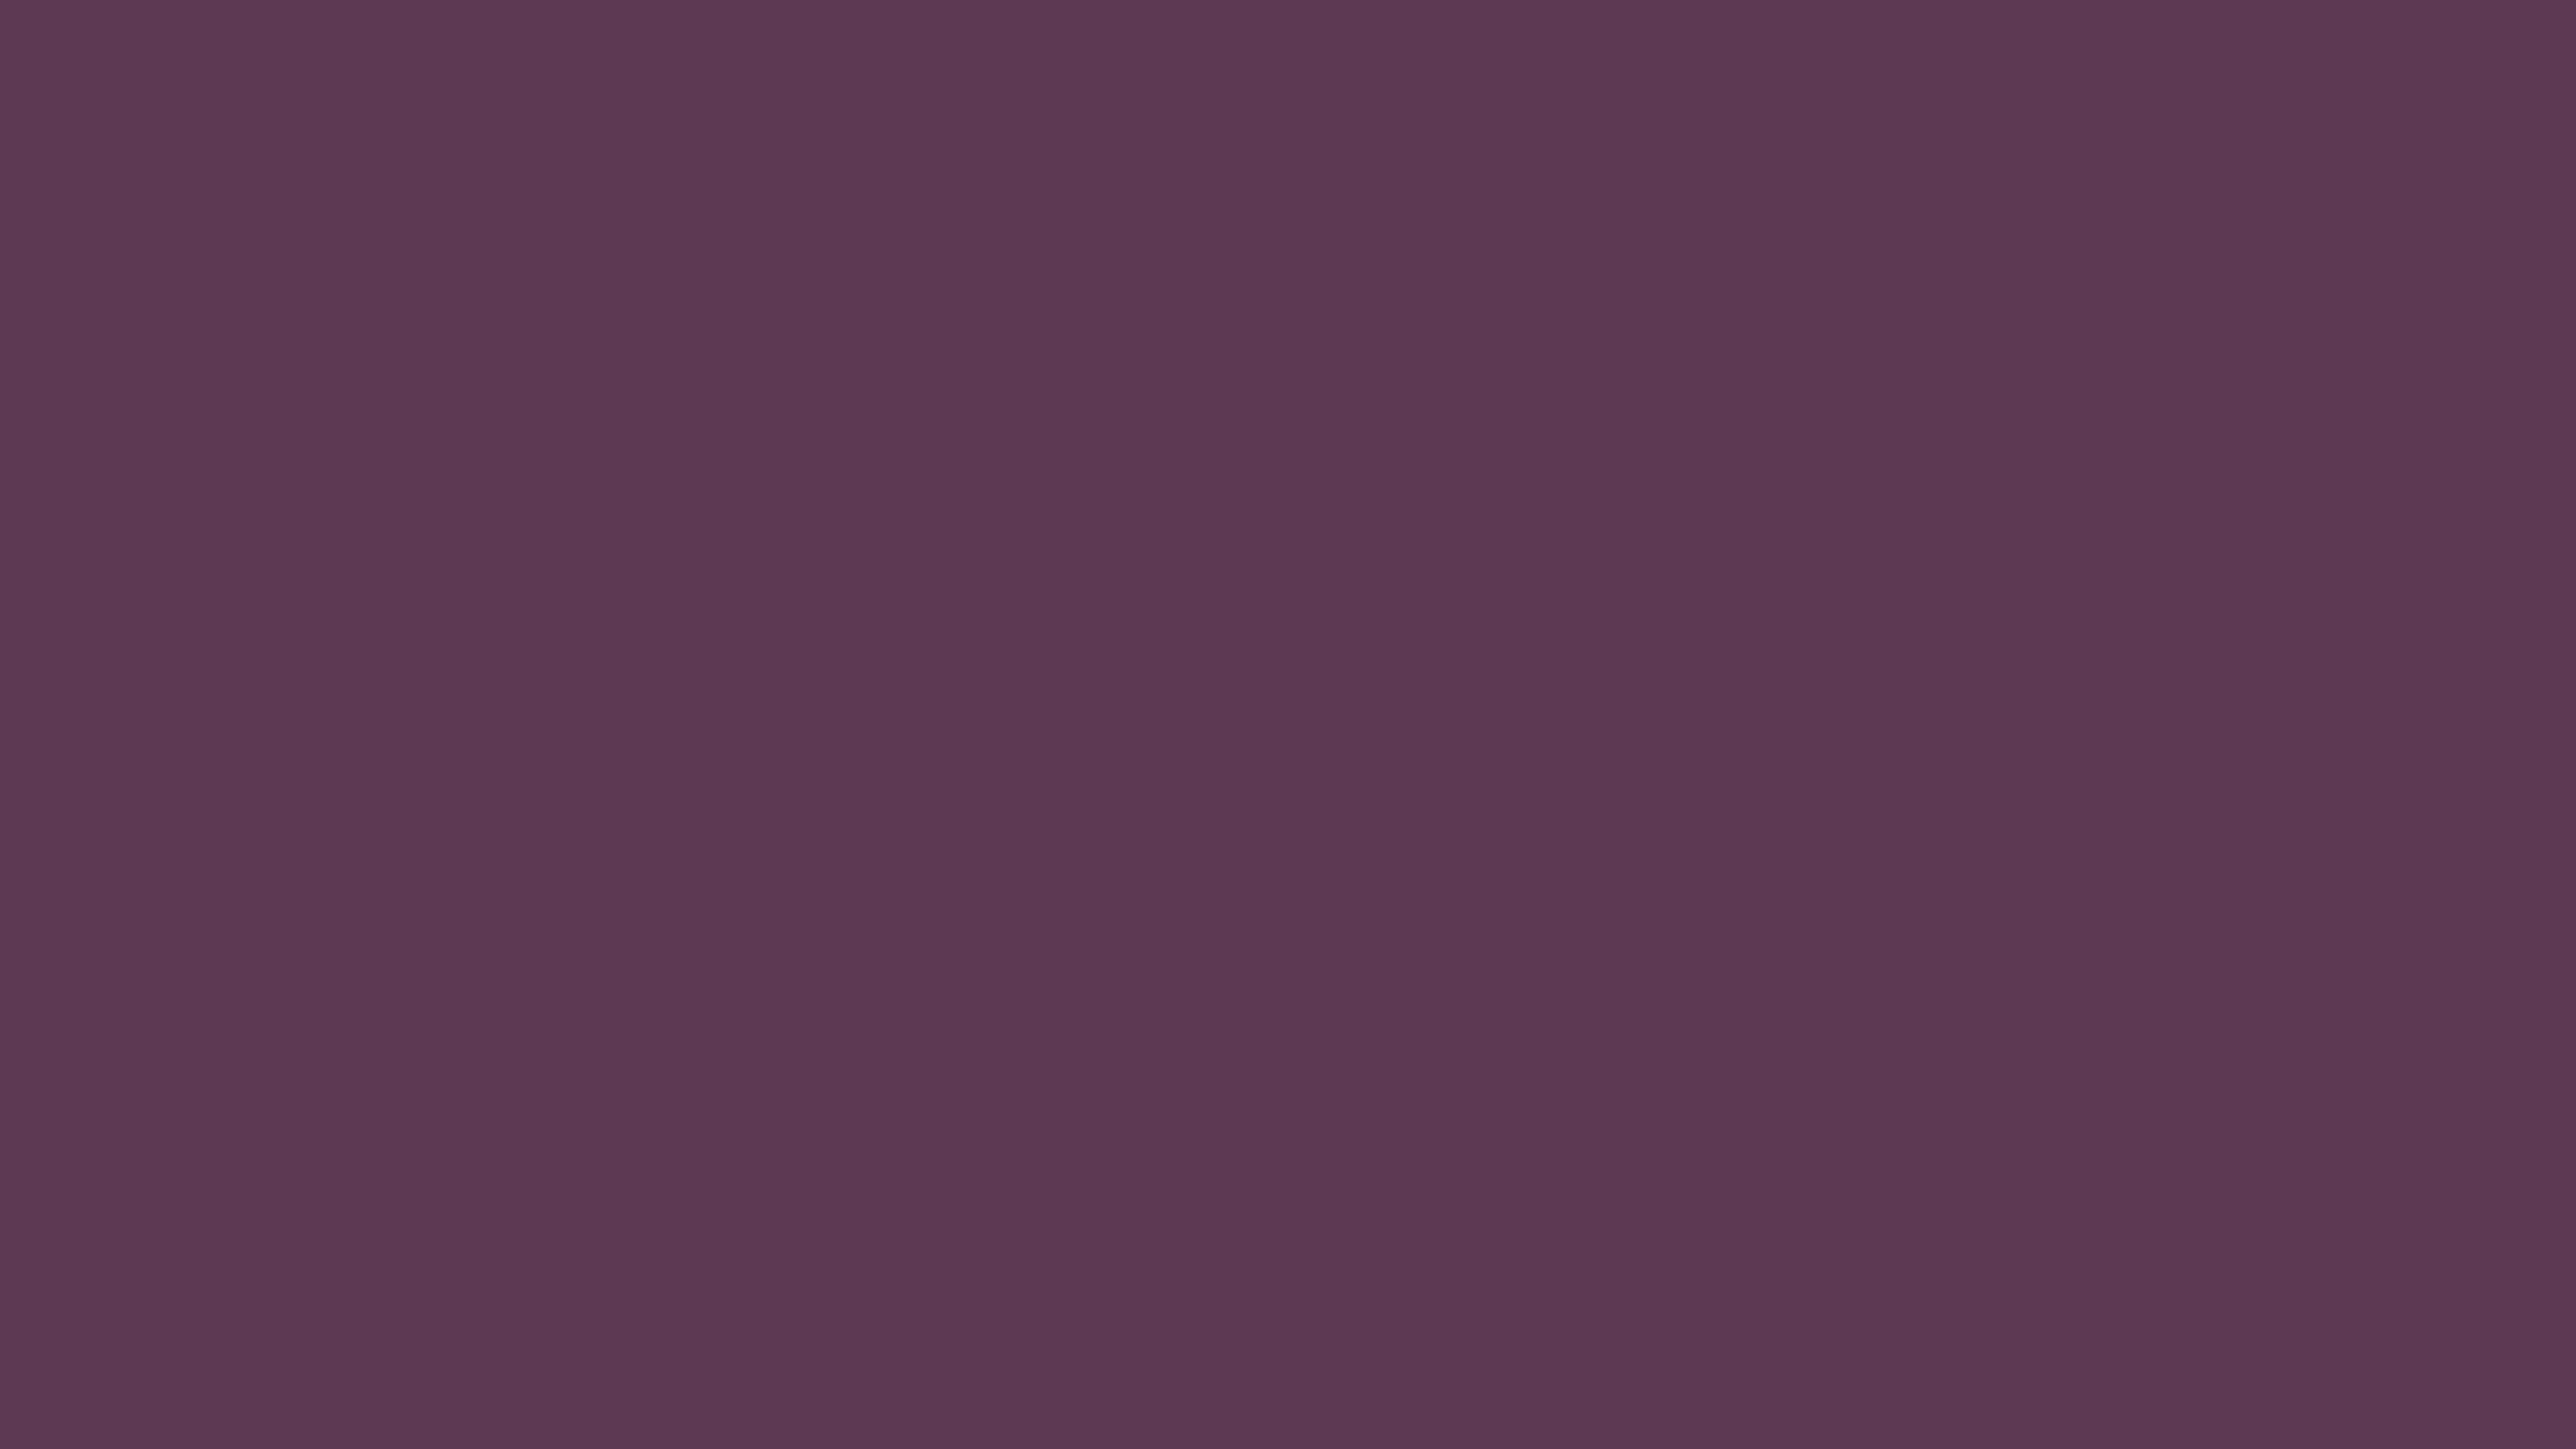 4096x2304 Dark Byzantium Solid Color Background